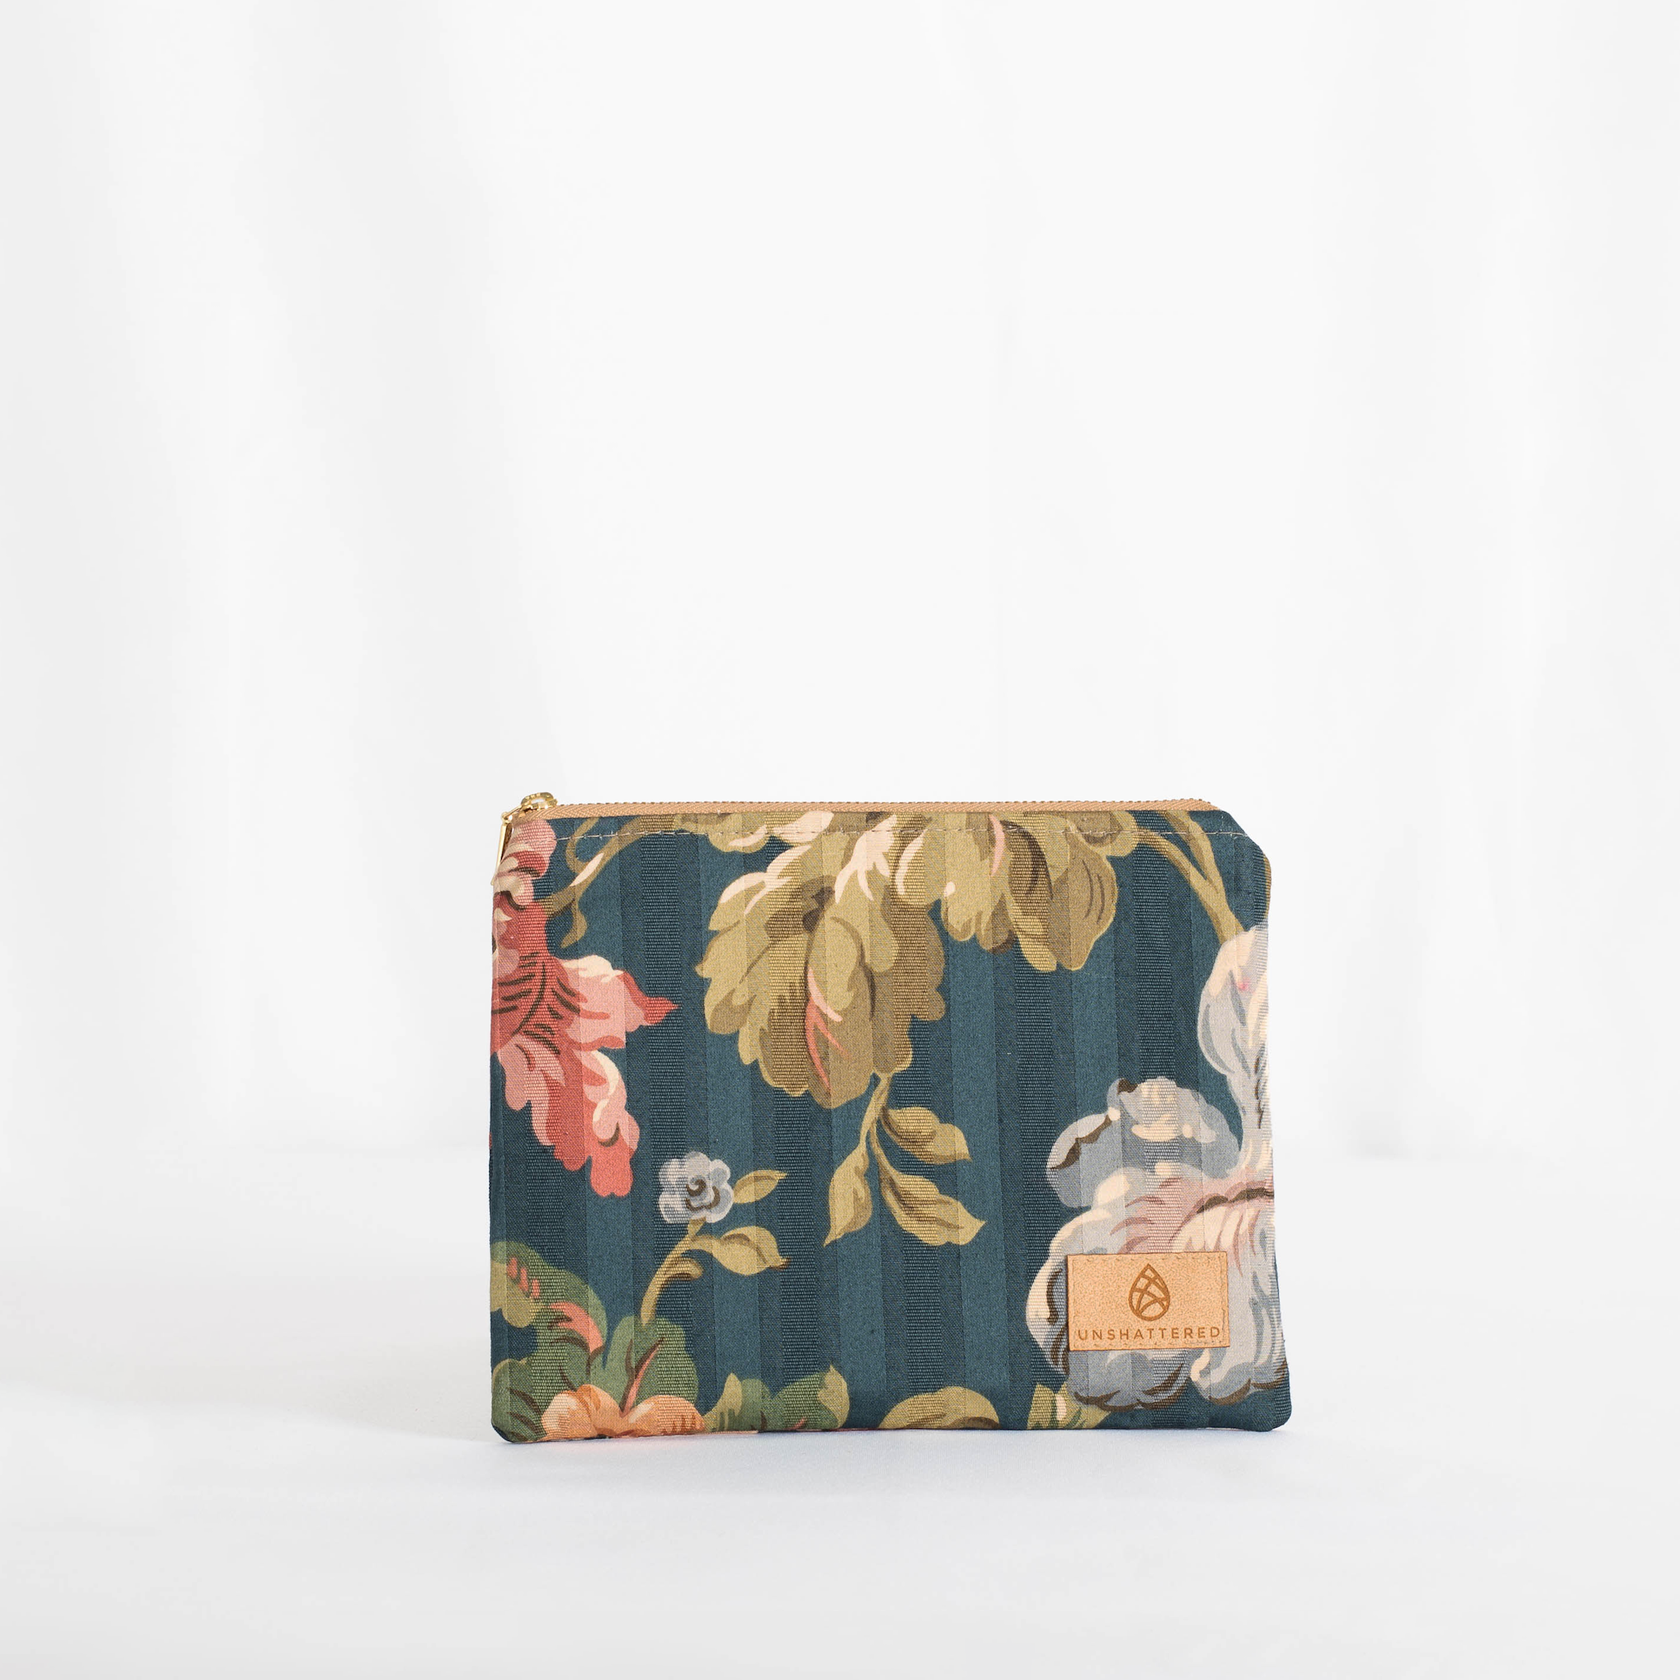 Screen printed canvas zipper pouch - Brooklyn Grown - Made in Brooklyn, NY  ⎮MN DAVIS⎮Le Comptoir Américain